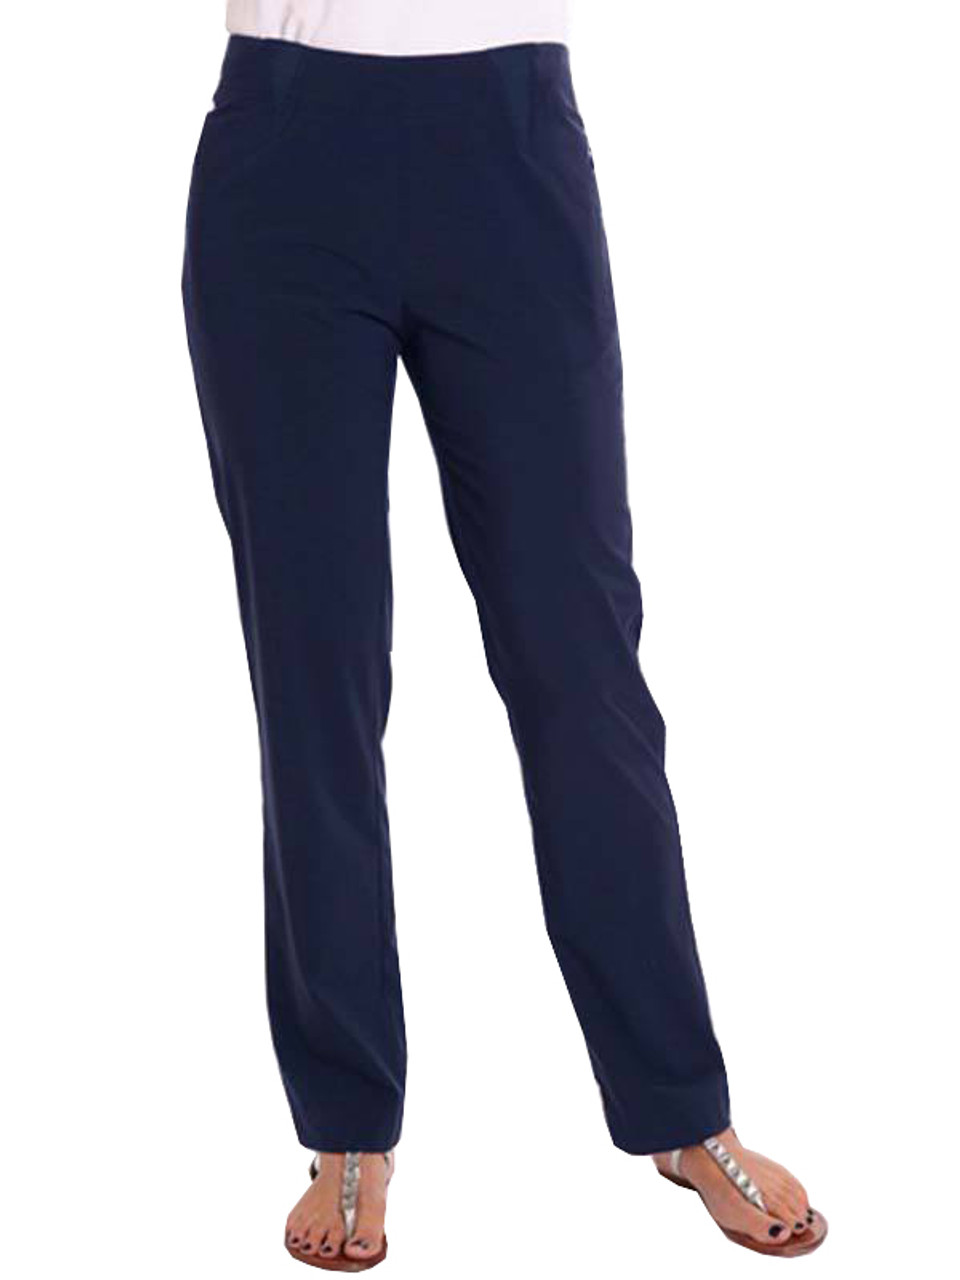 Women's Navy Blue Pants